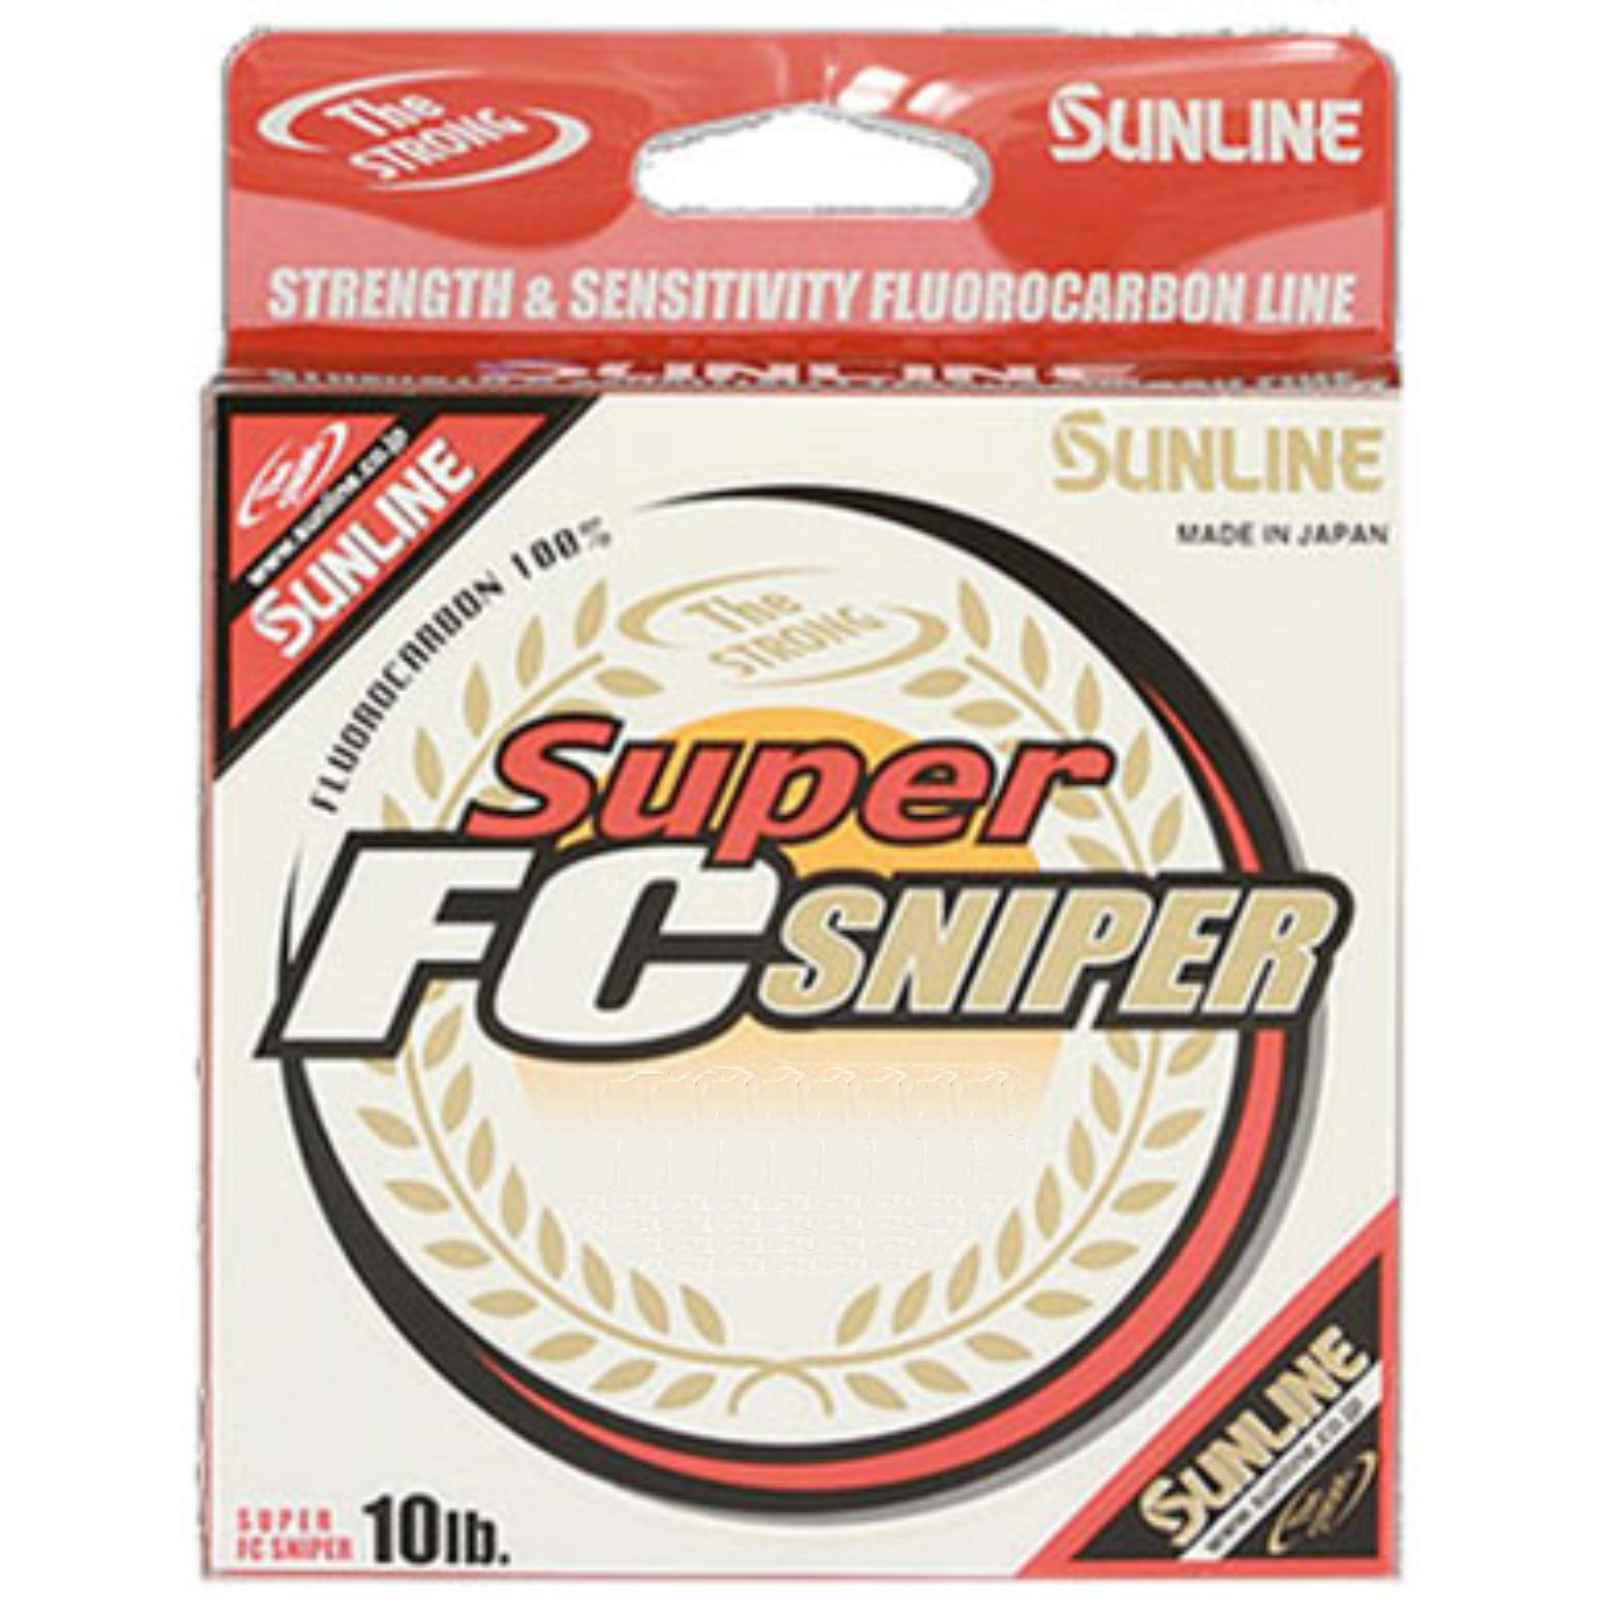 Sunline Super FC Sniper Clear Fluorocarbon Fishing Line 1200yd Spool 